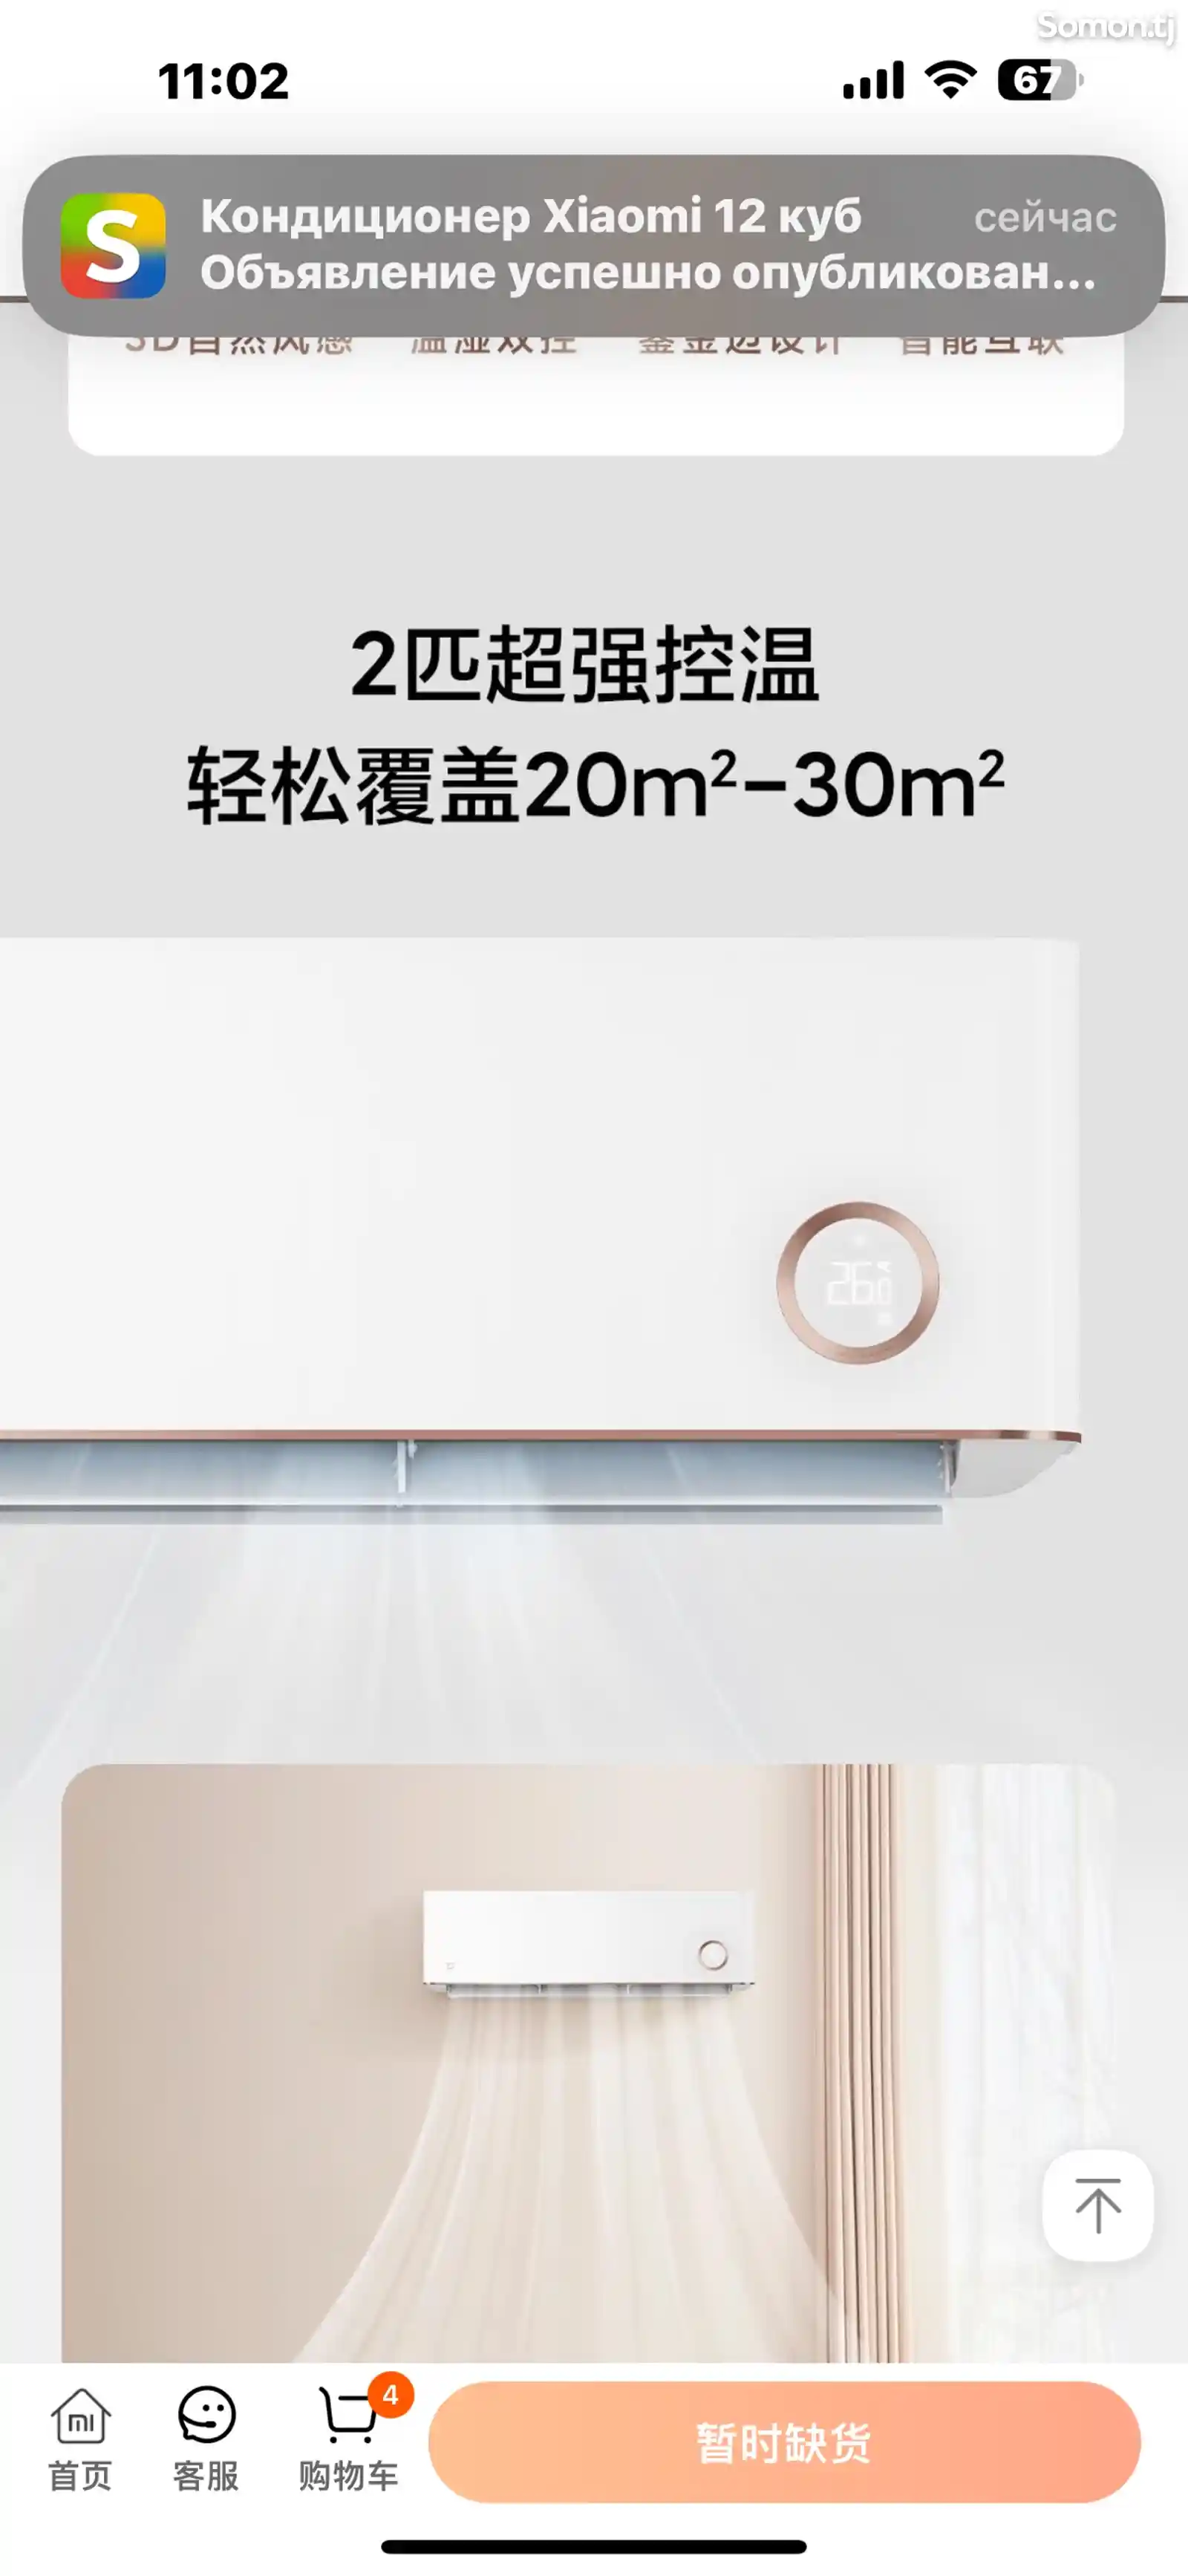 Кондиционер Xiaomi Mijia 18 куб-3